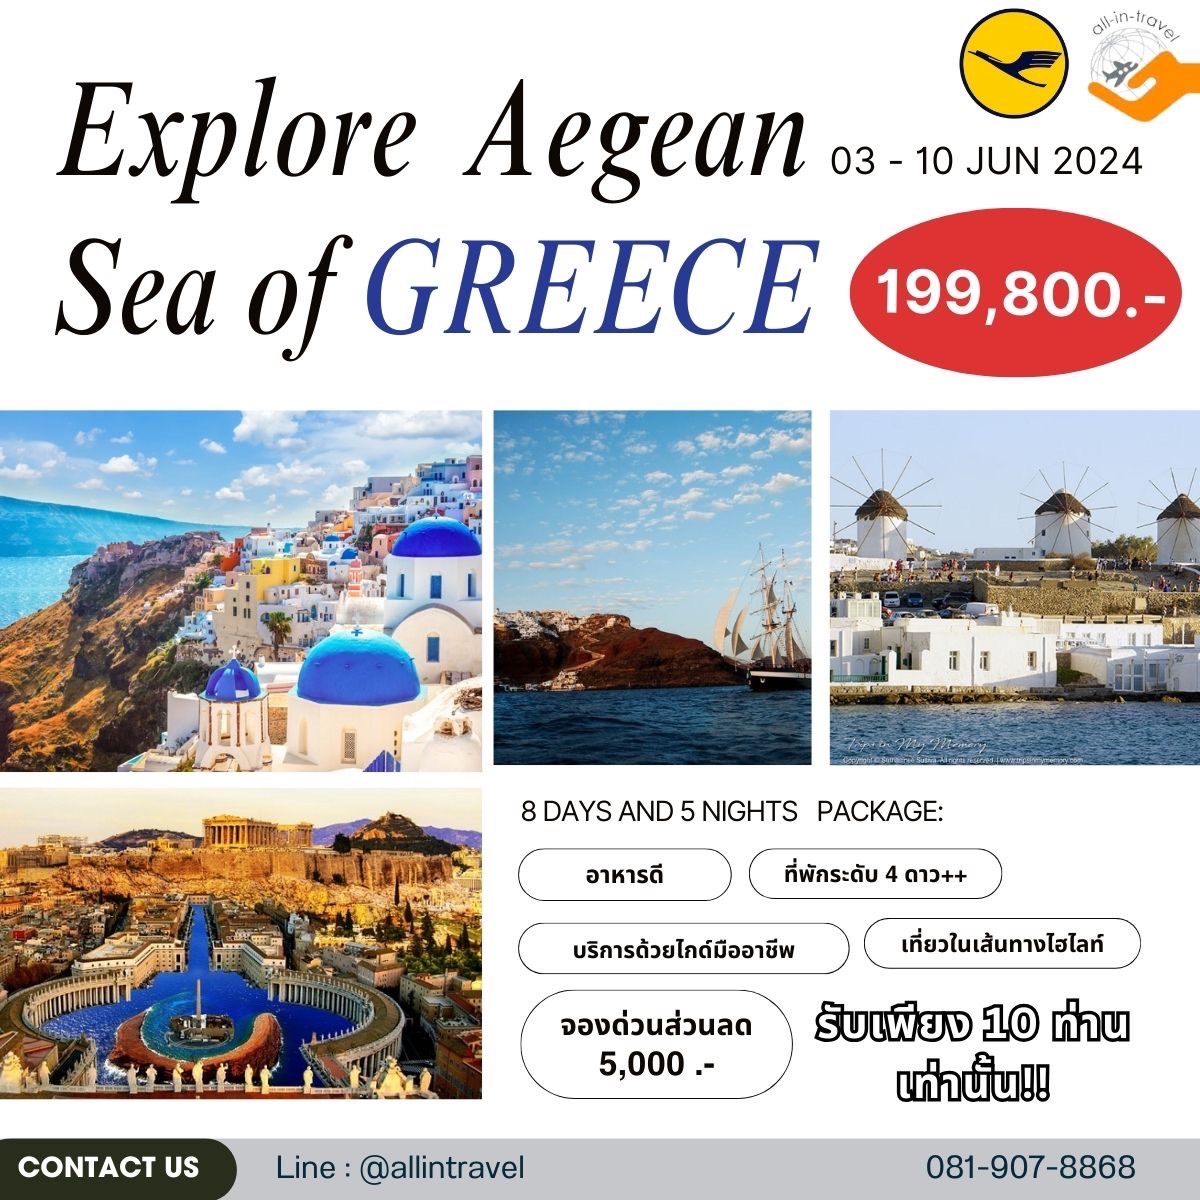 EXPLORE AEGEAN SEA OF GREECE